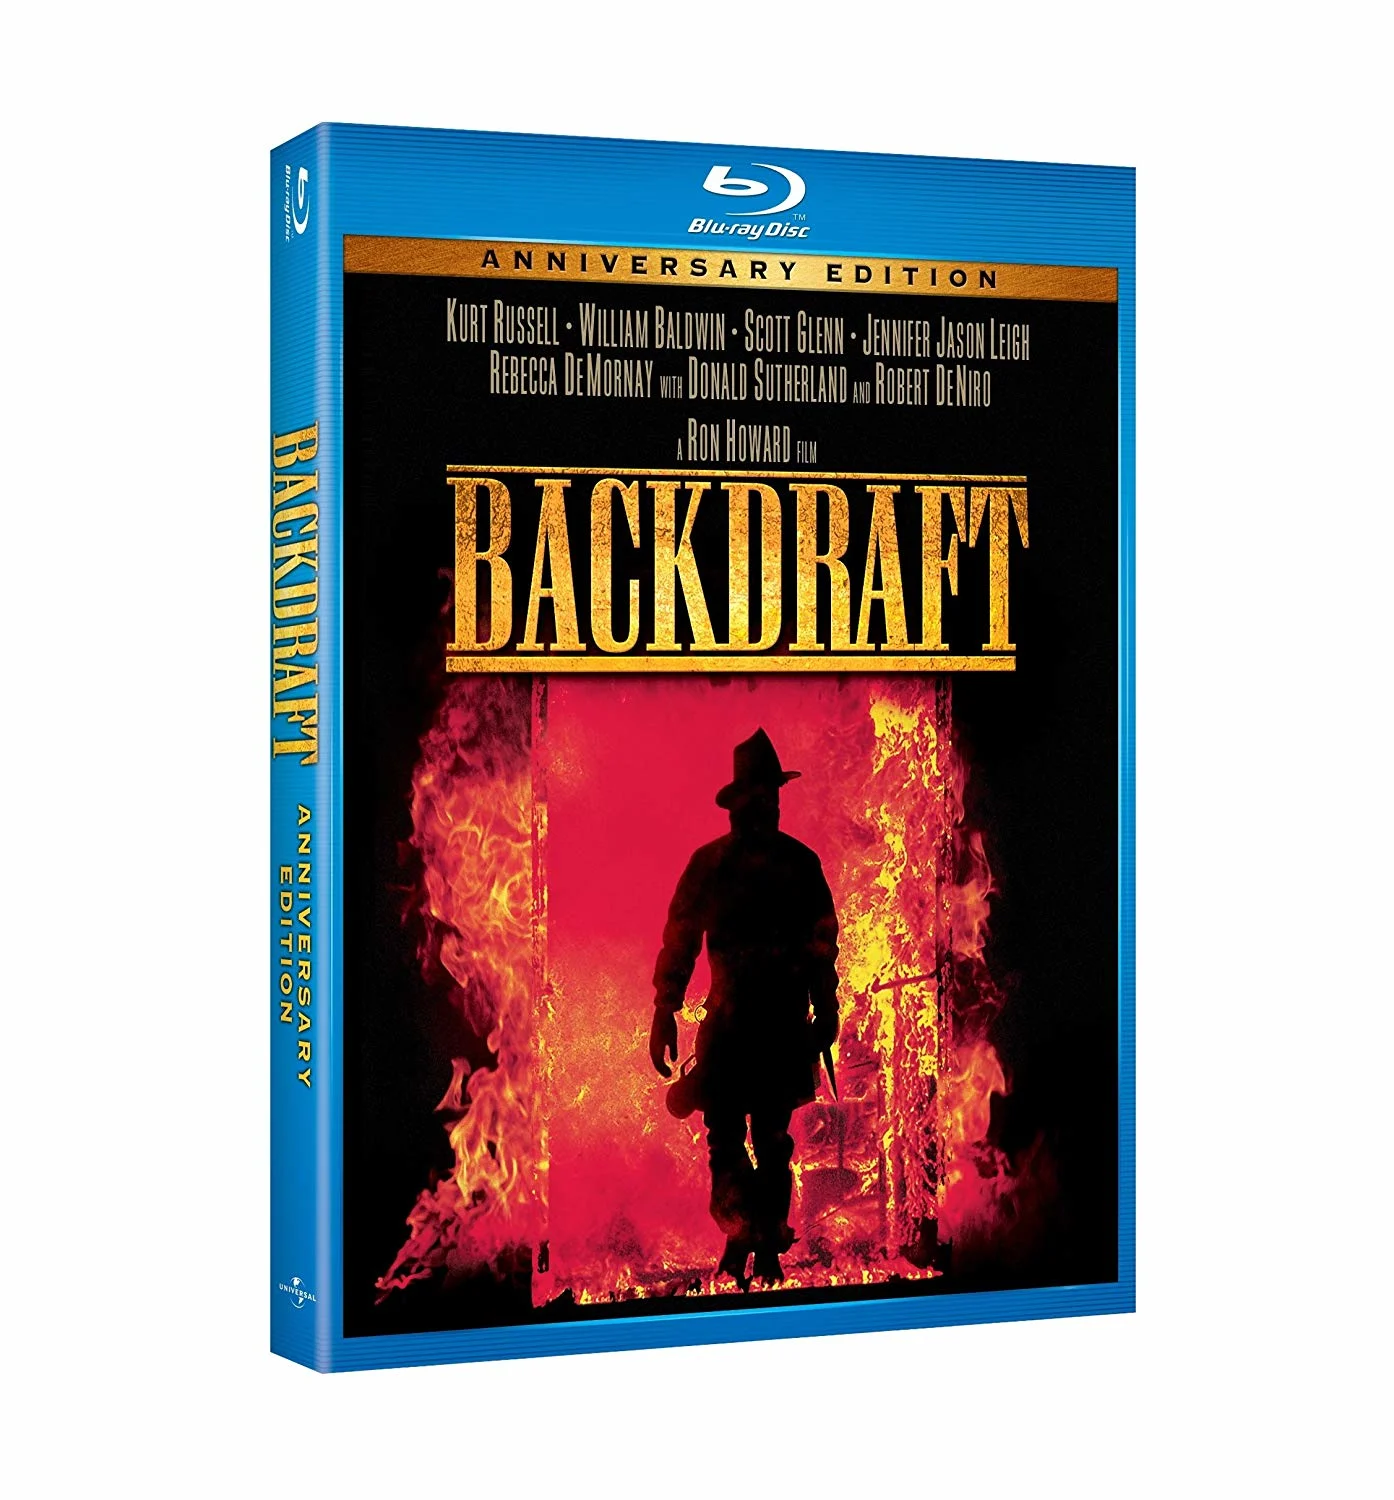 Backdraft (Blu-ray)